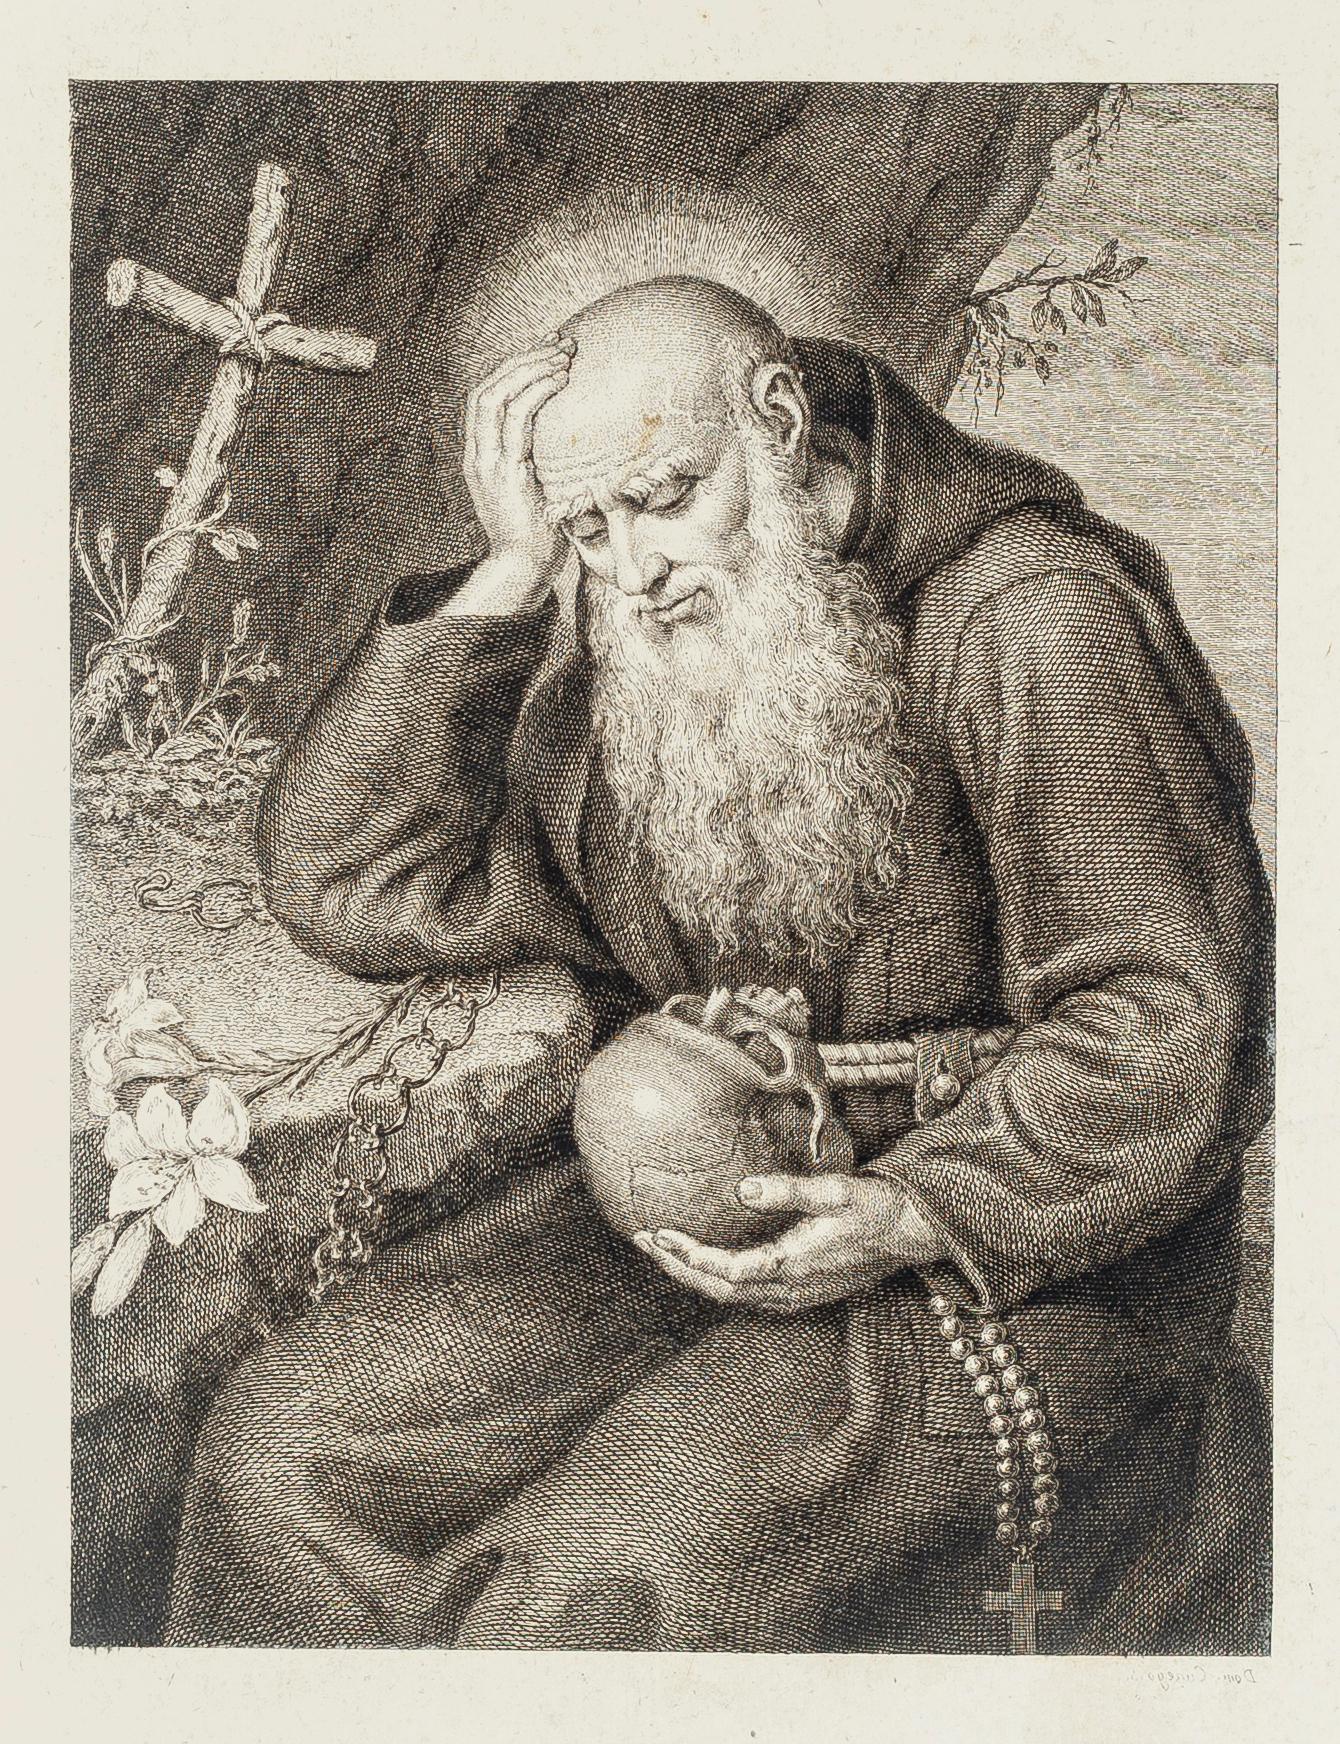 Unknown Portrait Print - Saint Jerome with Skull - Original Etching - 18th Century